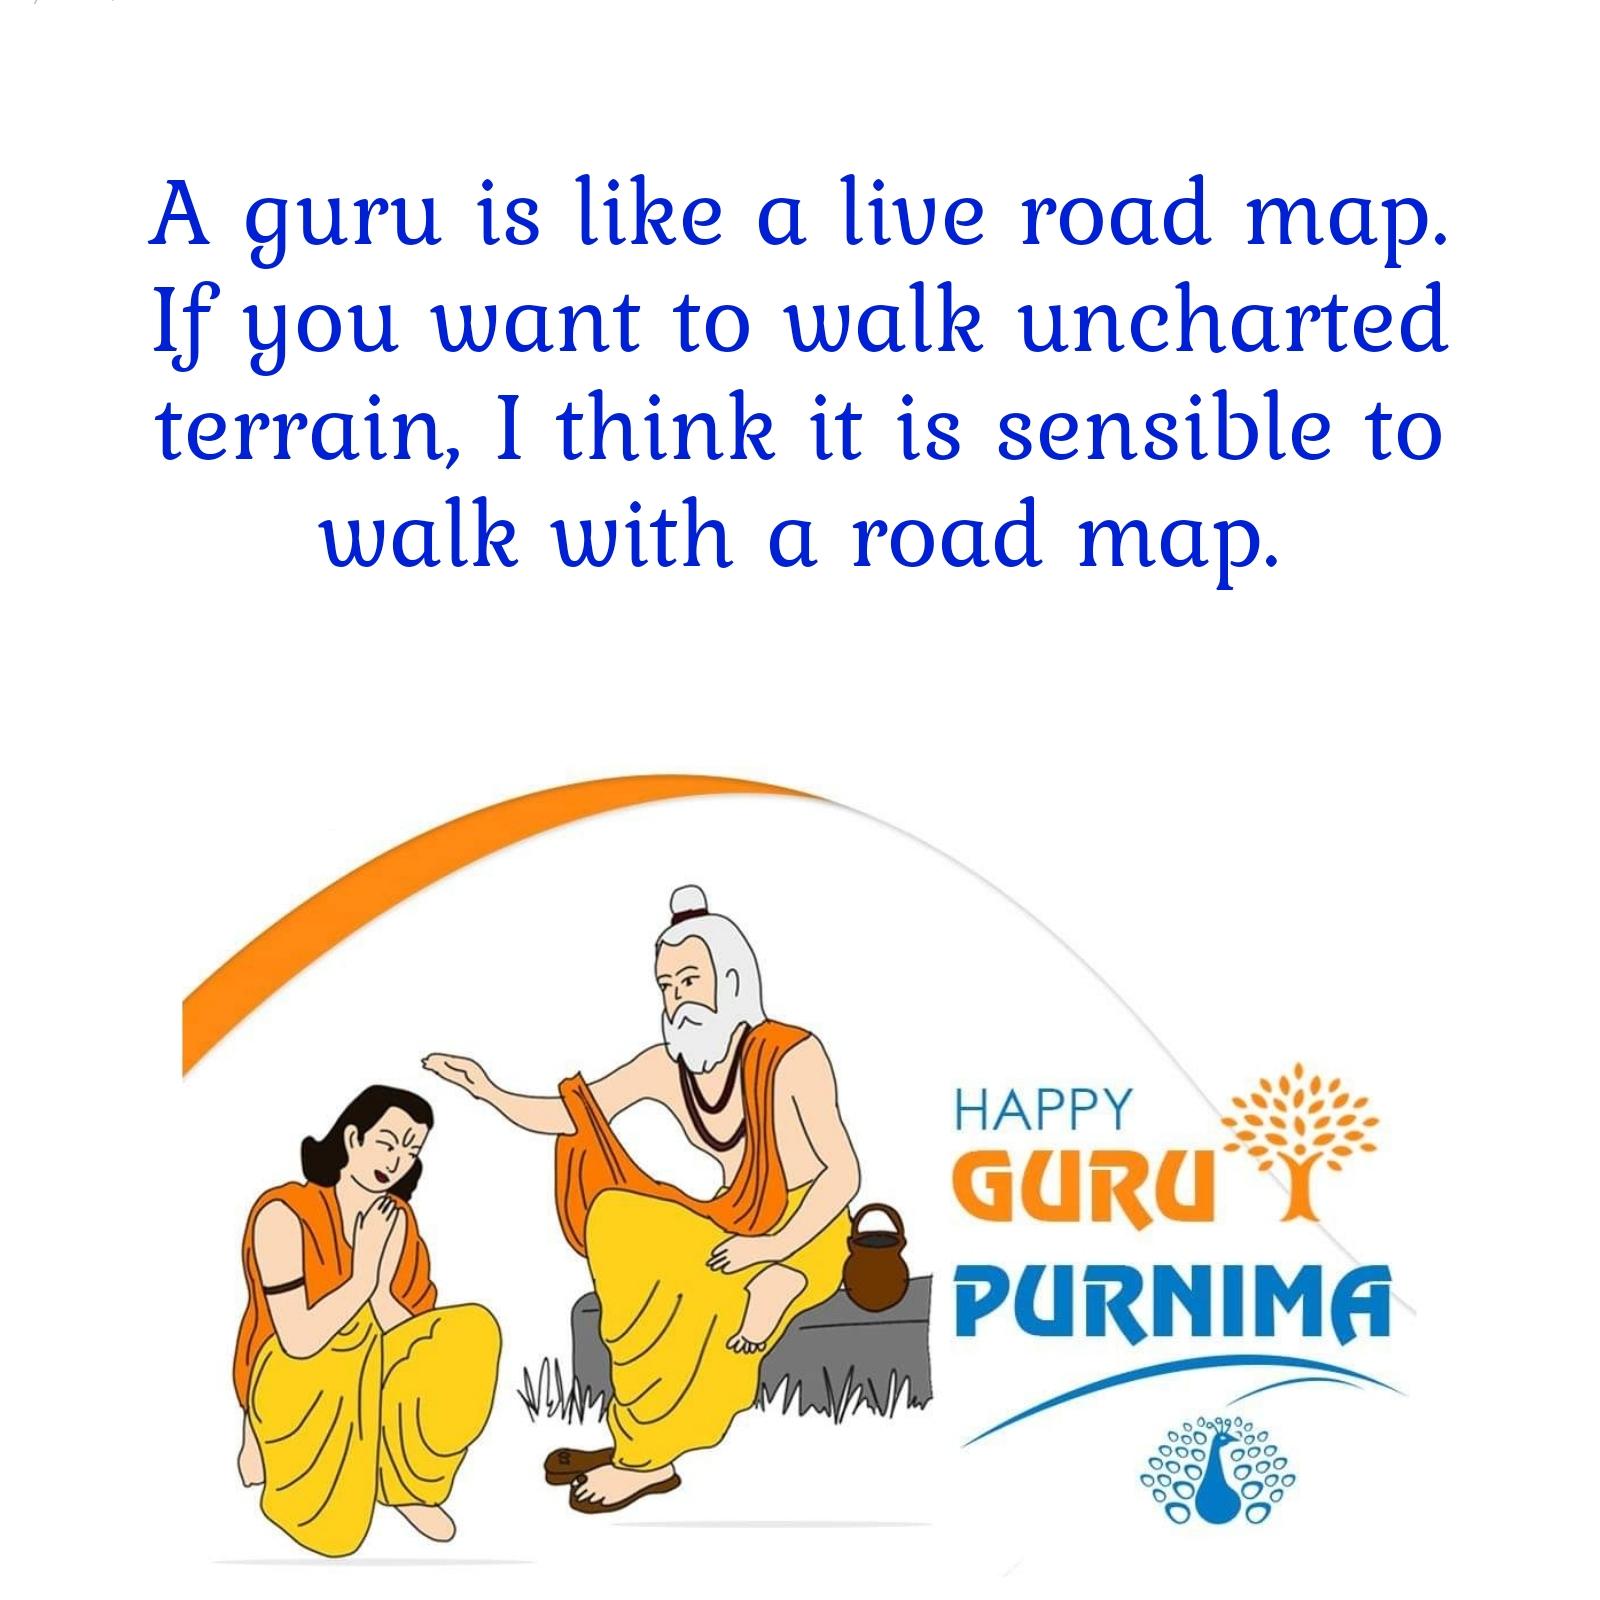 A guru is like a live road map If you want to walk uncharted terrain